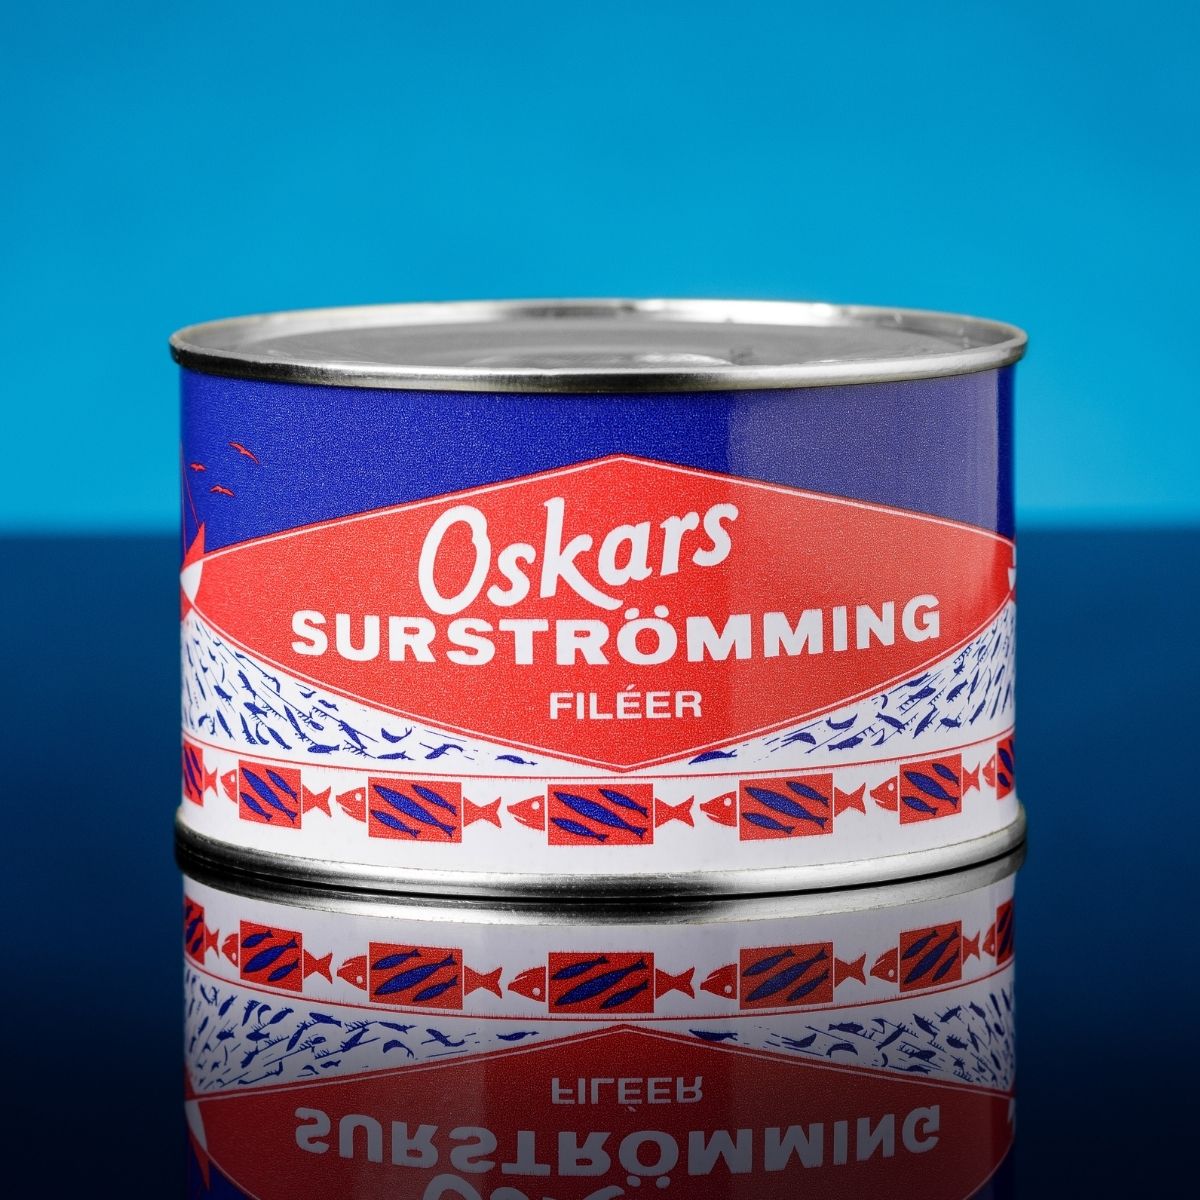 Surströmming  Tasting Sweden's Foulest-Smelling Fish - Amuse